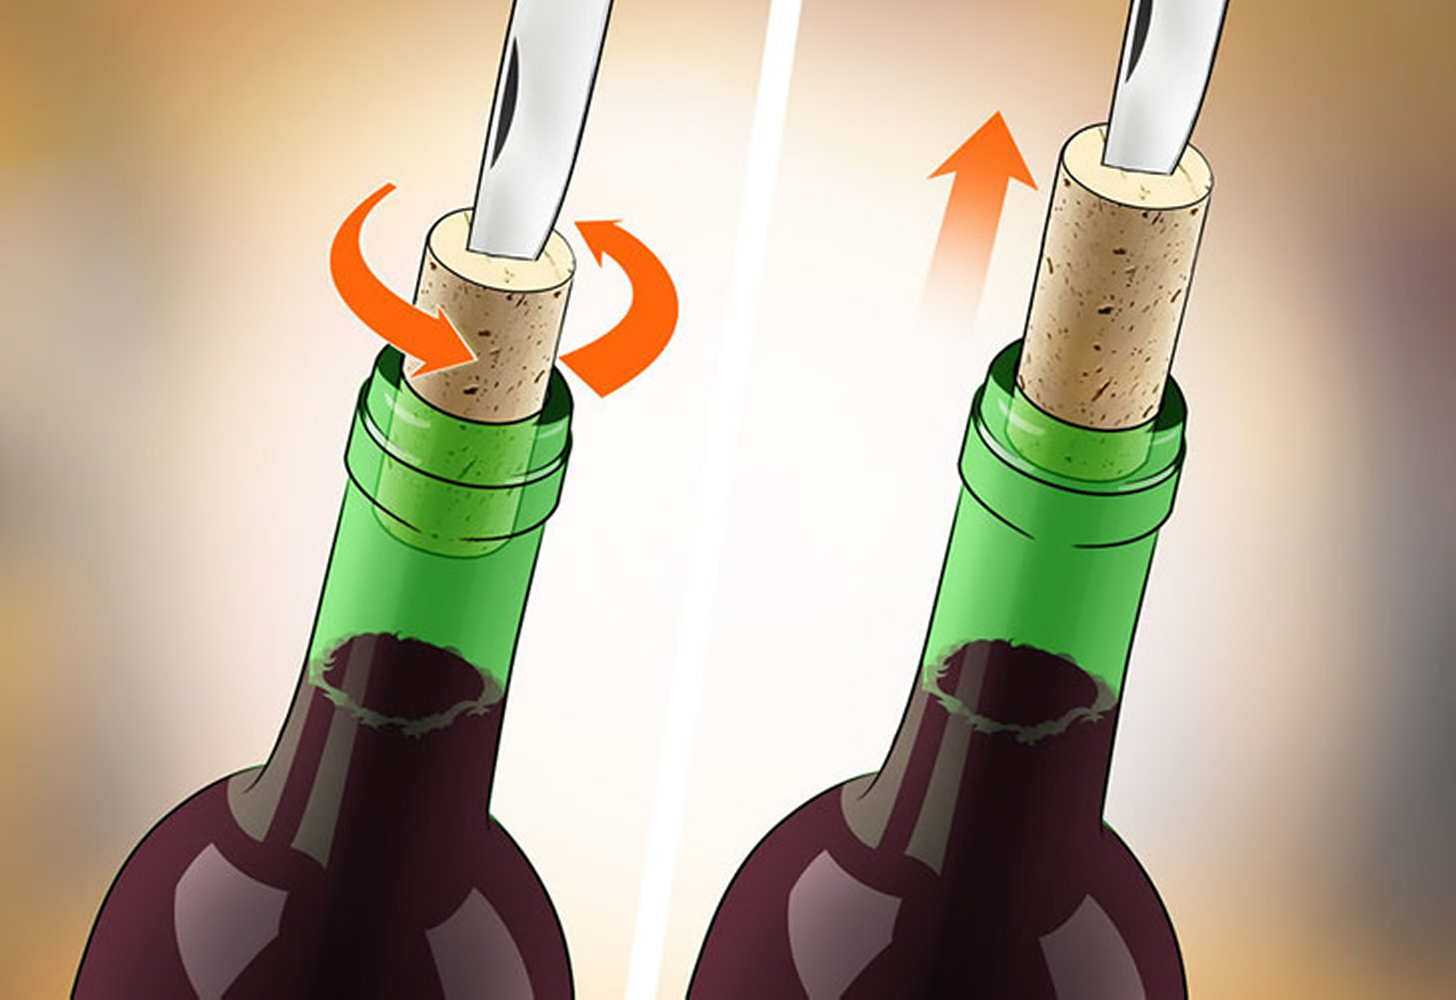 Как открыть бутылку вина без штопора - wikihow